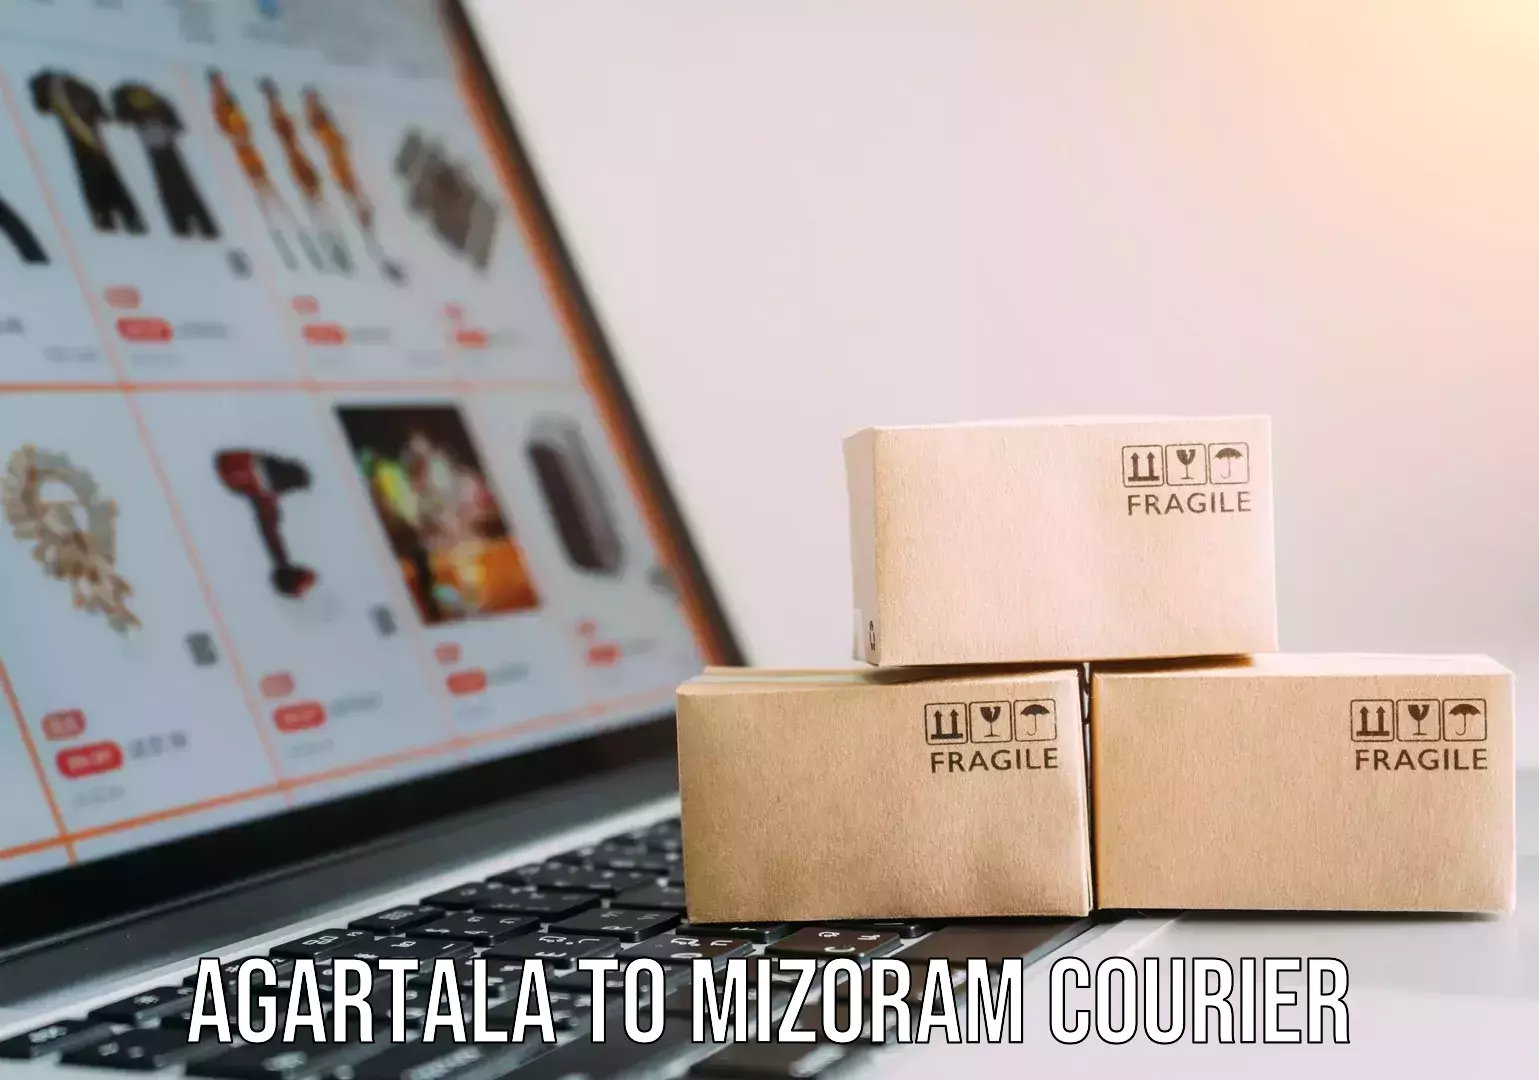 Global logistics network Agartala to Mizoram